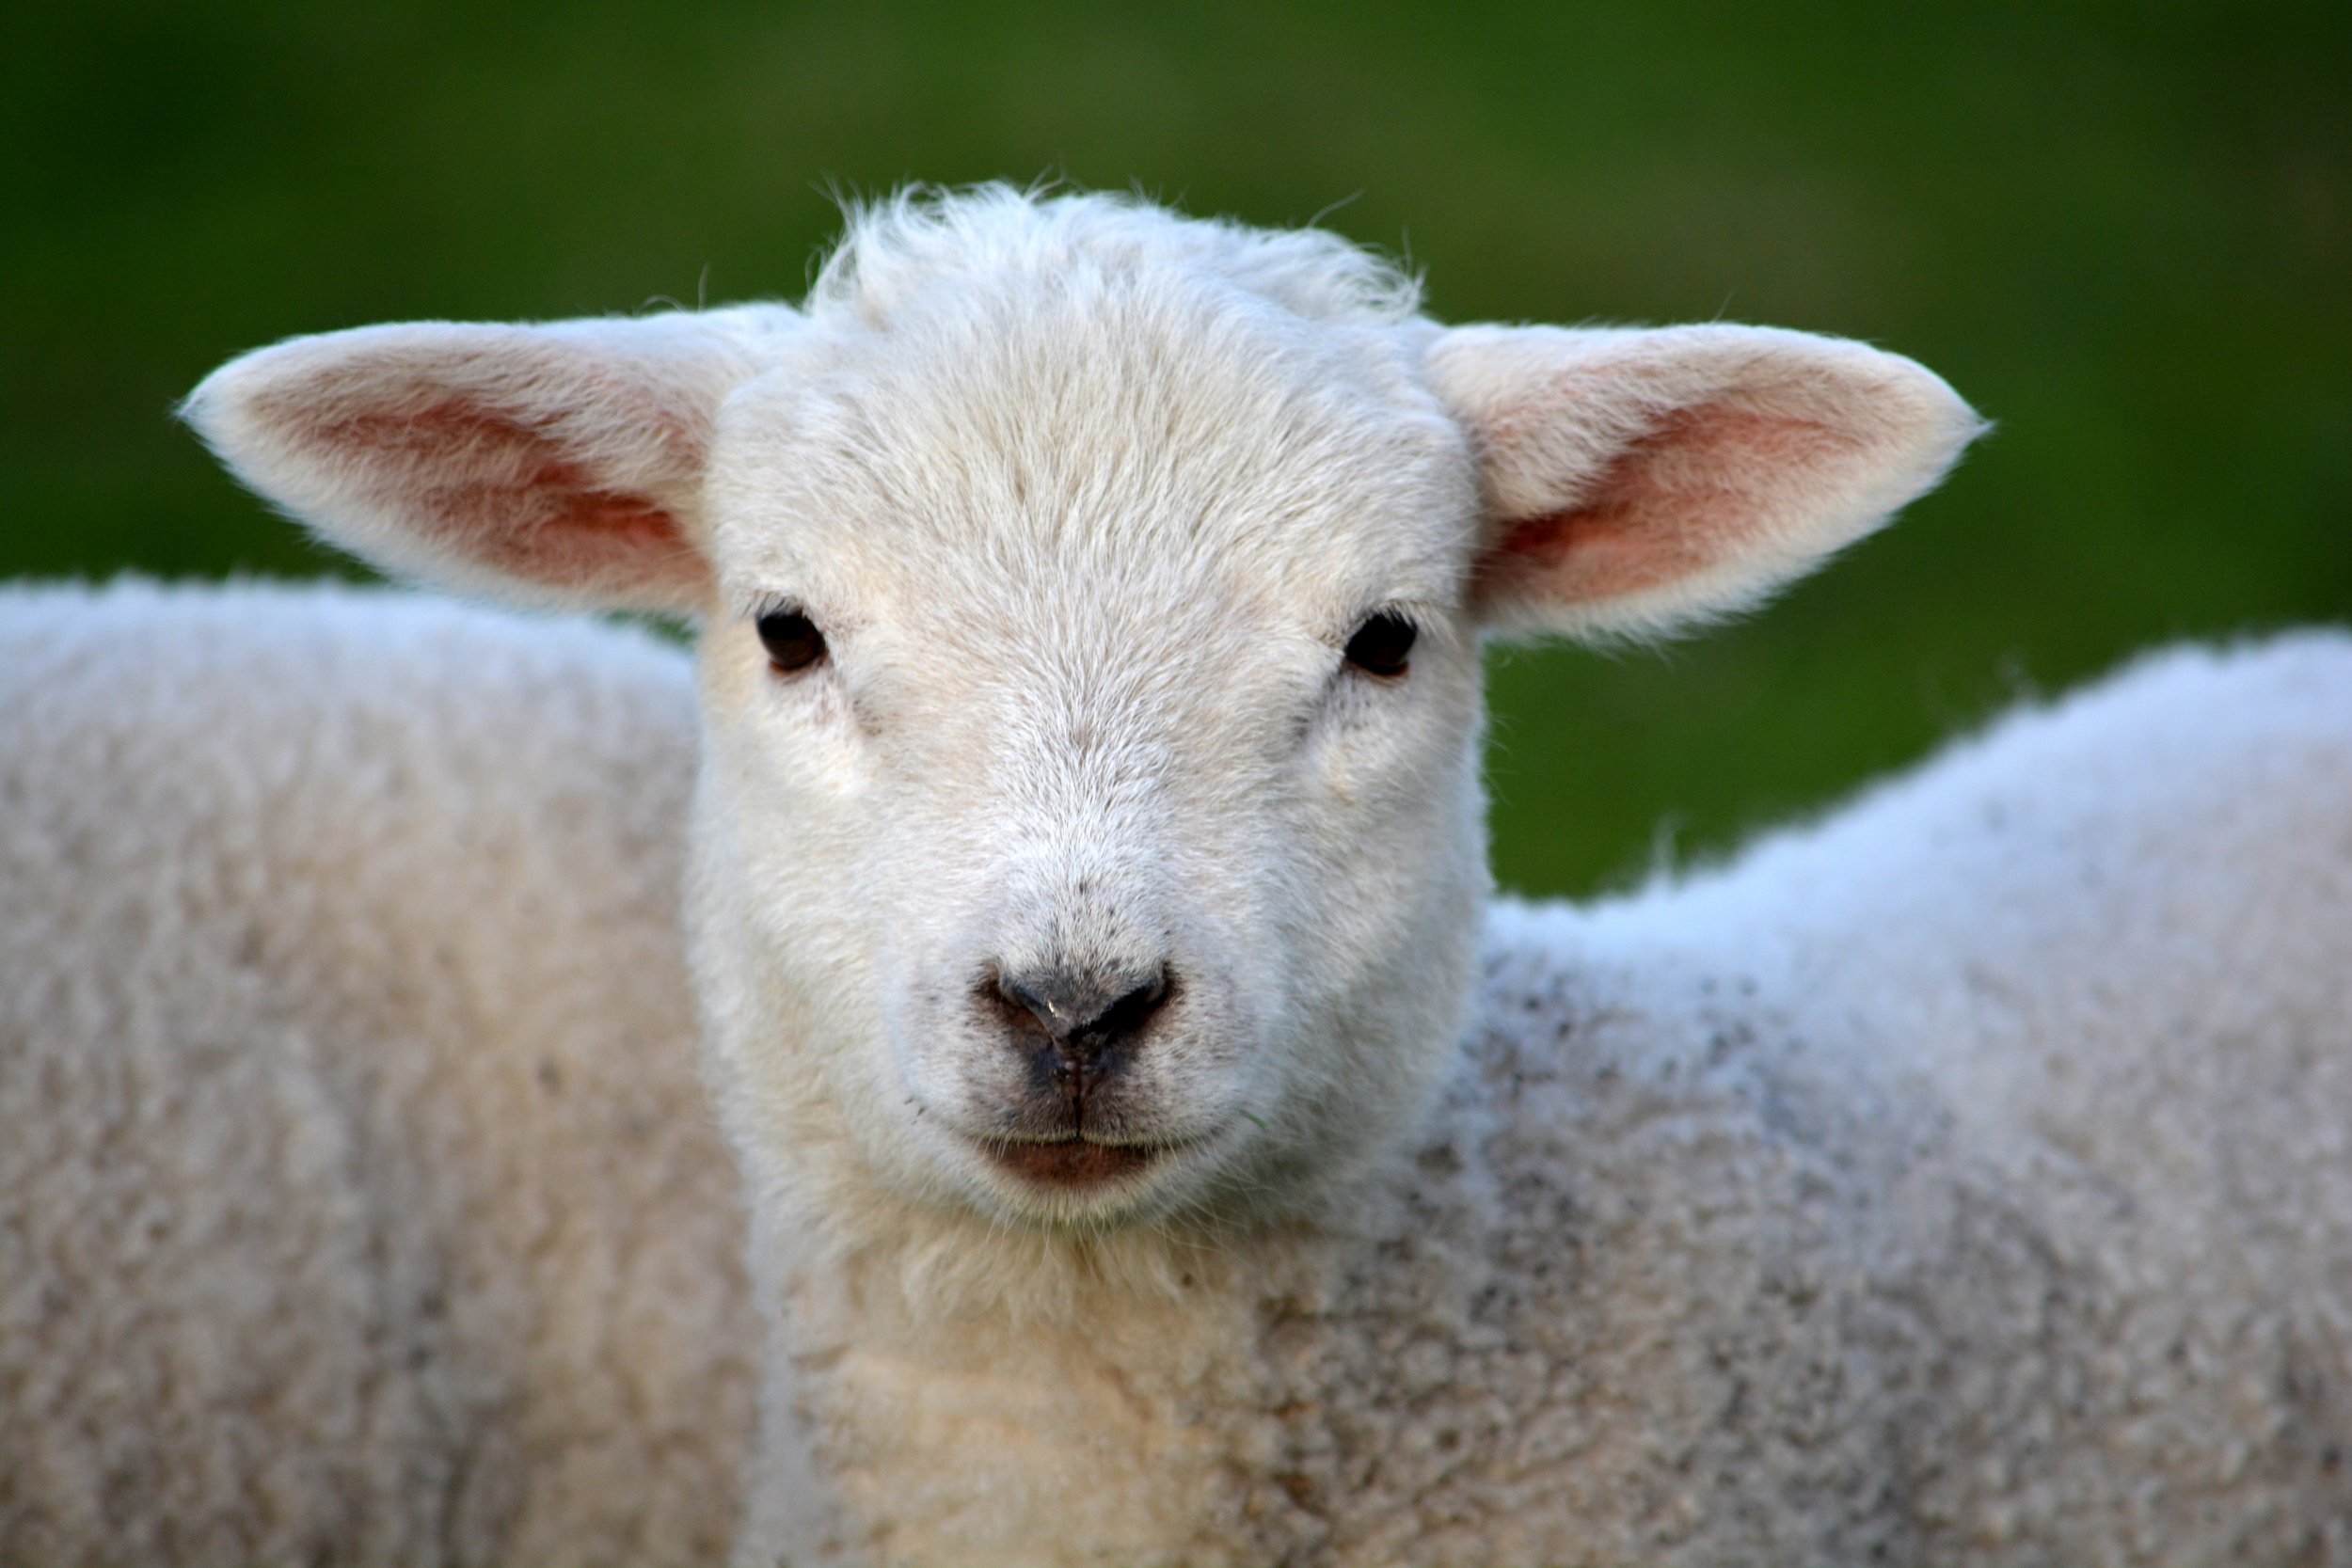  Baby Lamb 